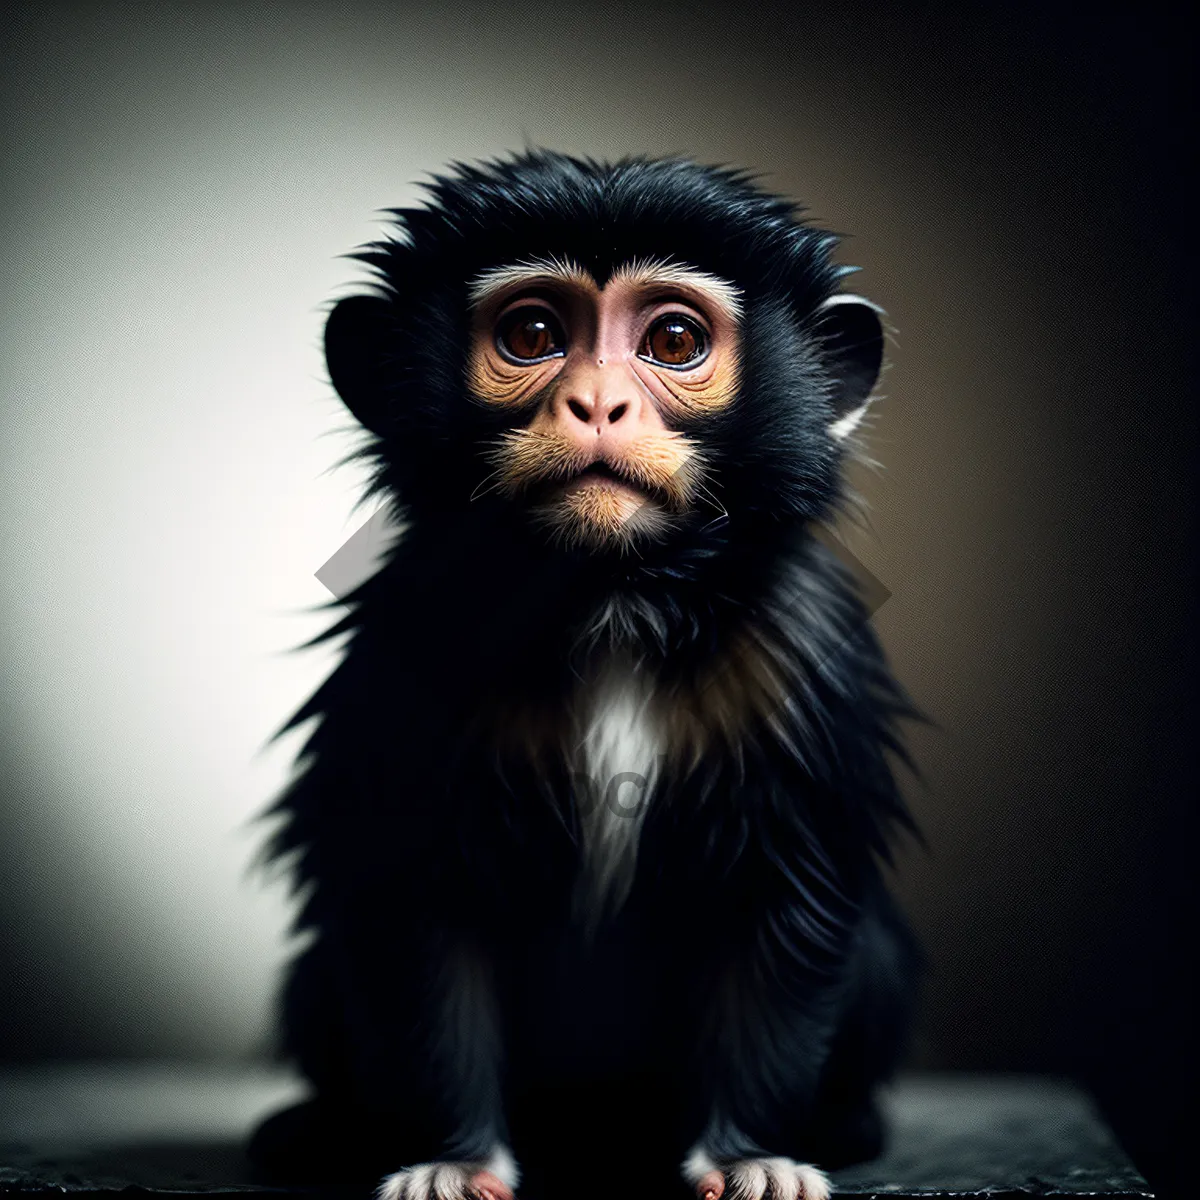 Picture of Wild Black Monkey Primate: A Captivating Ape Portrait